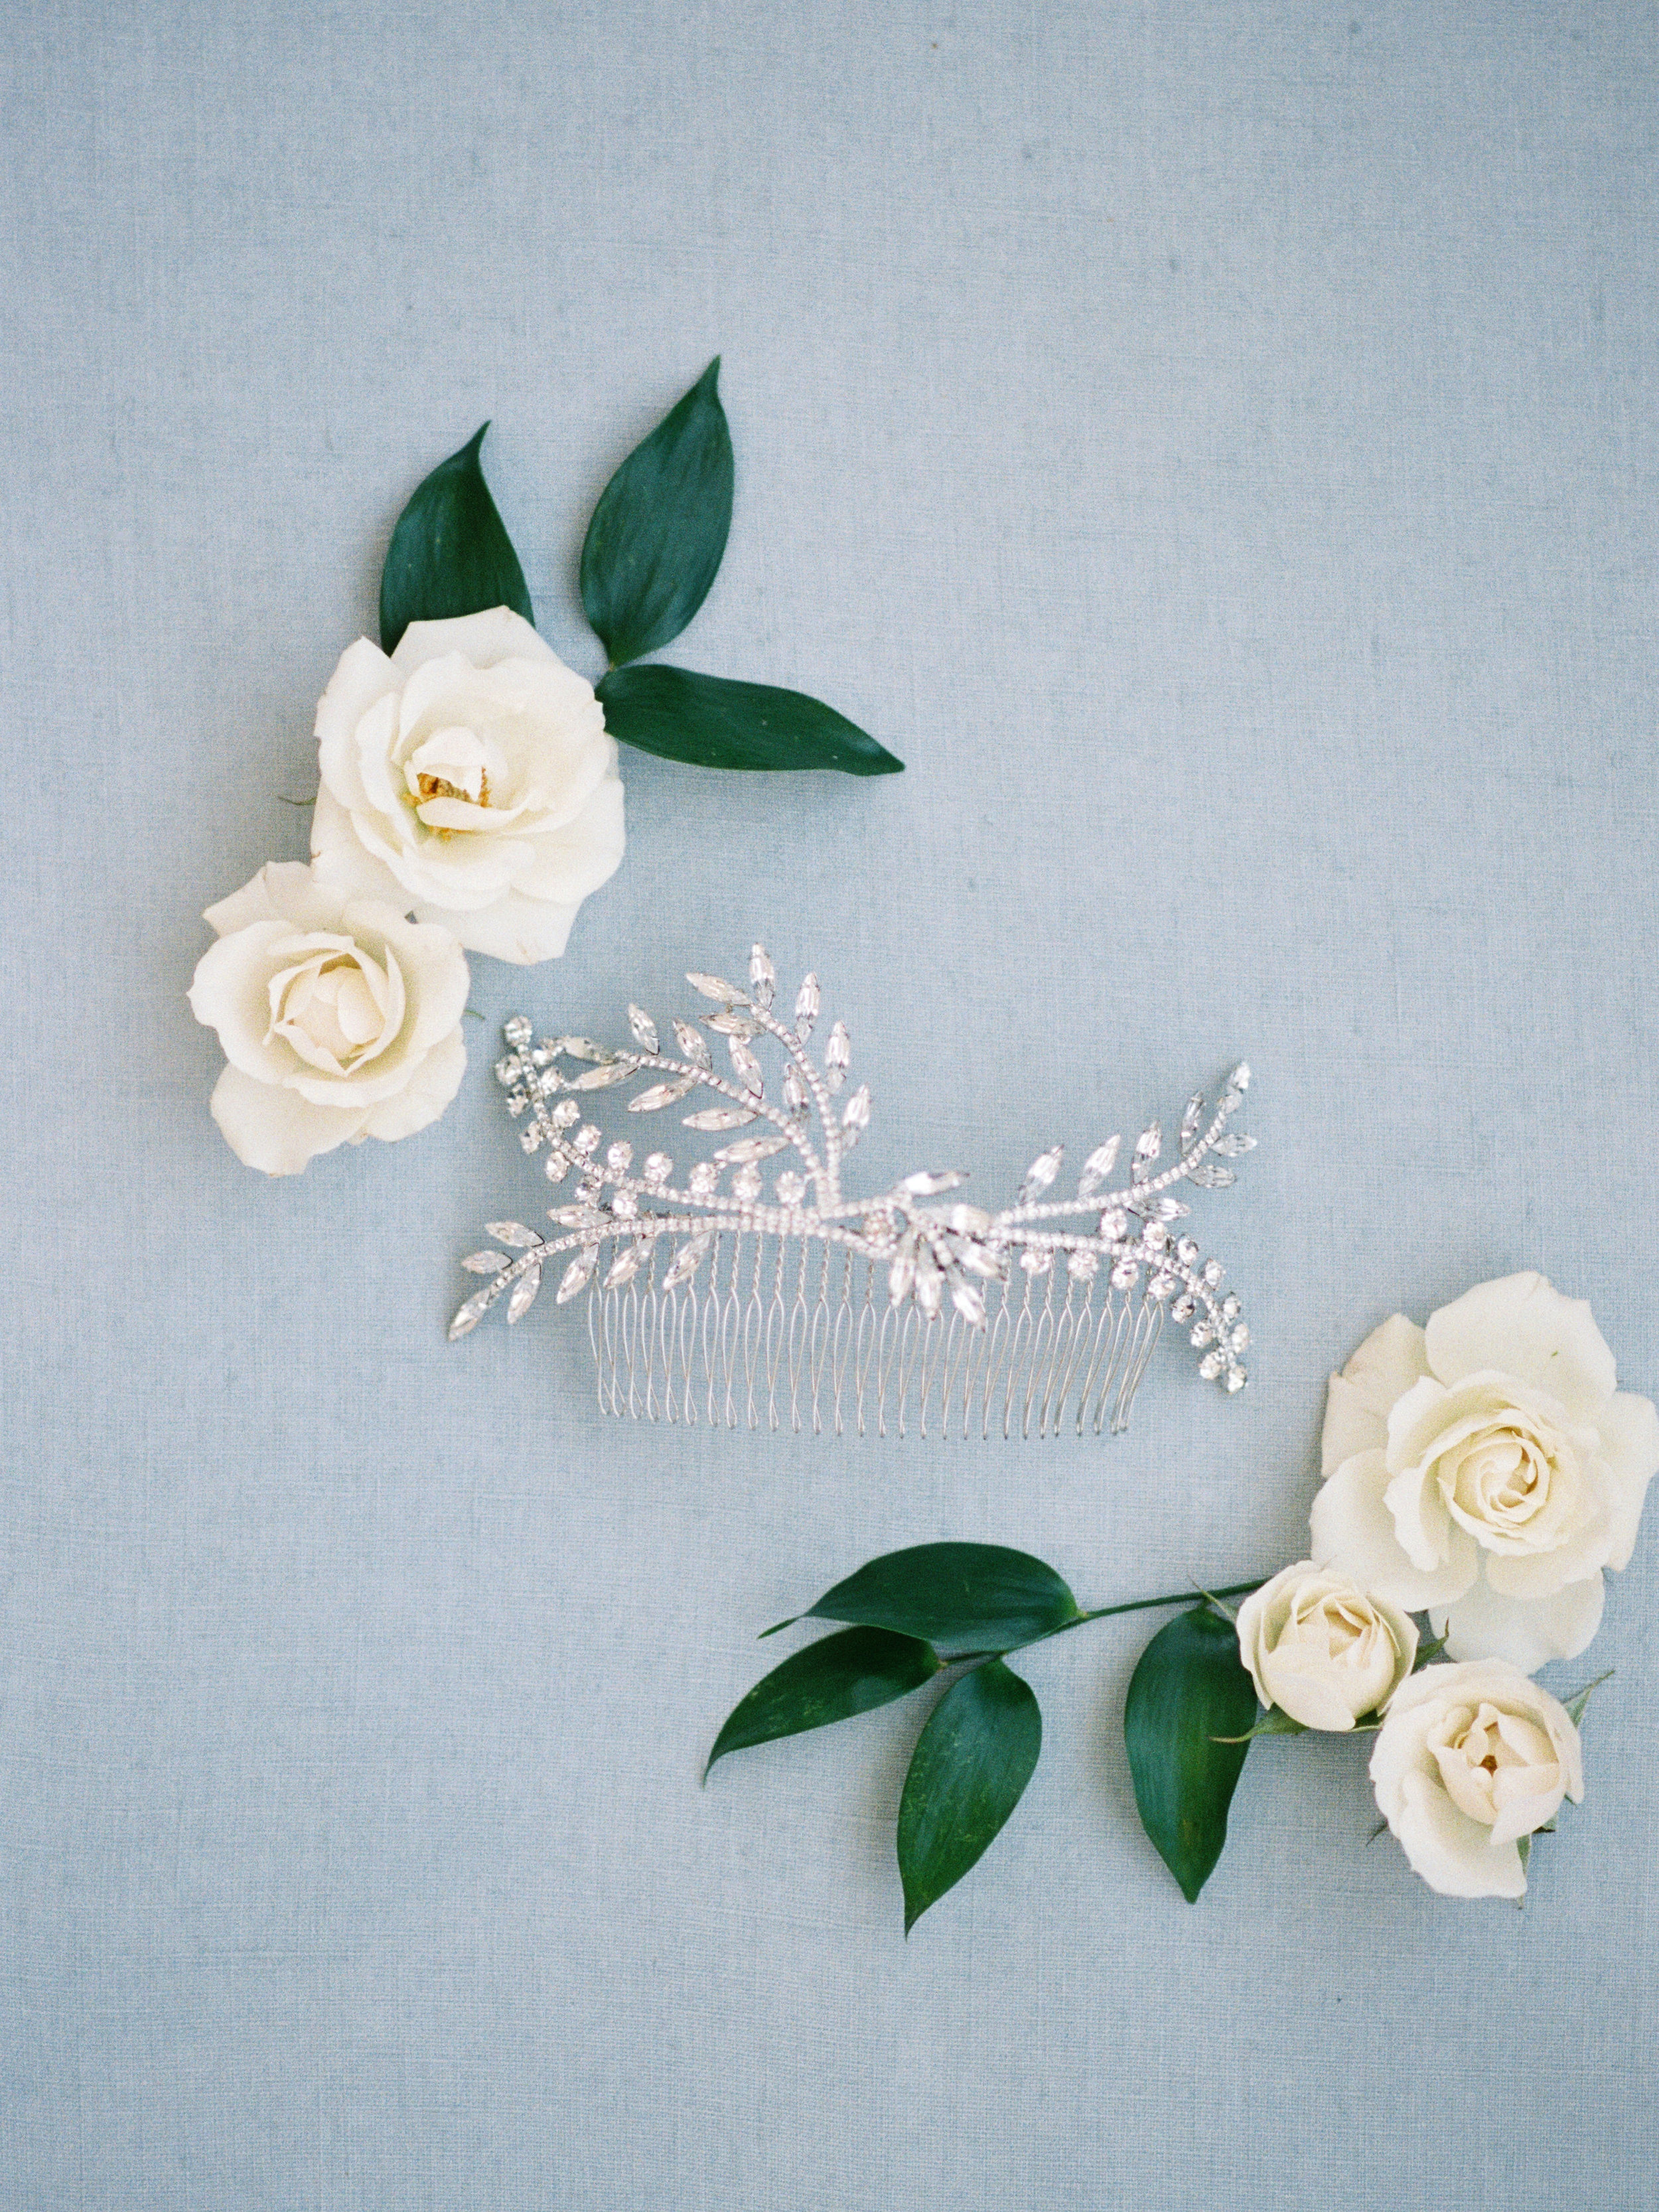  Jennifer Behr headpiece | Spring Bridal Inspiration from Little White Dress Bridal Shop in Denver, Colorado | Decorus Photography 